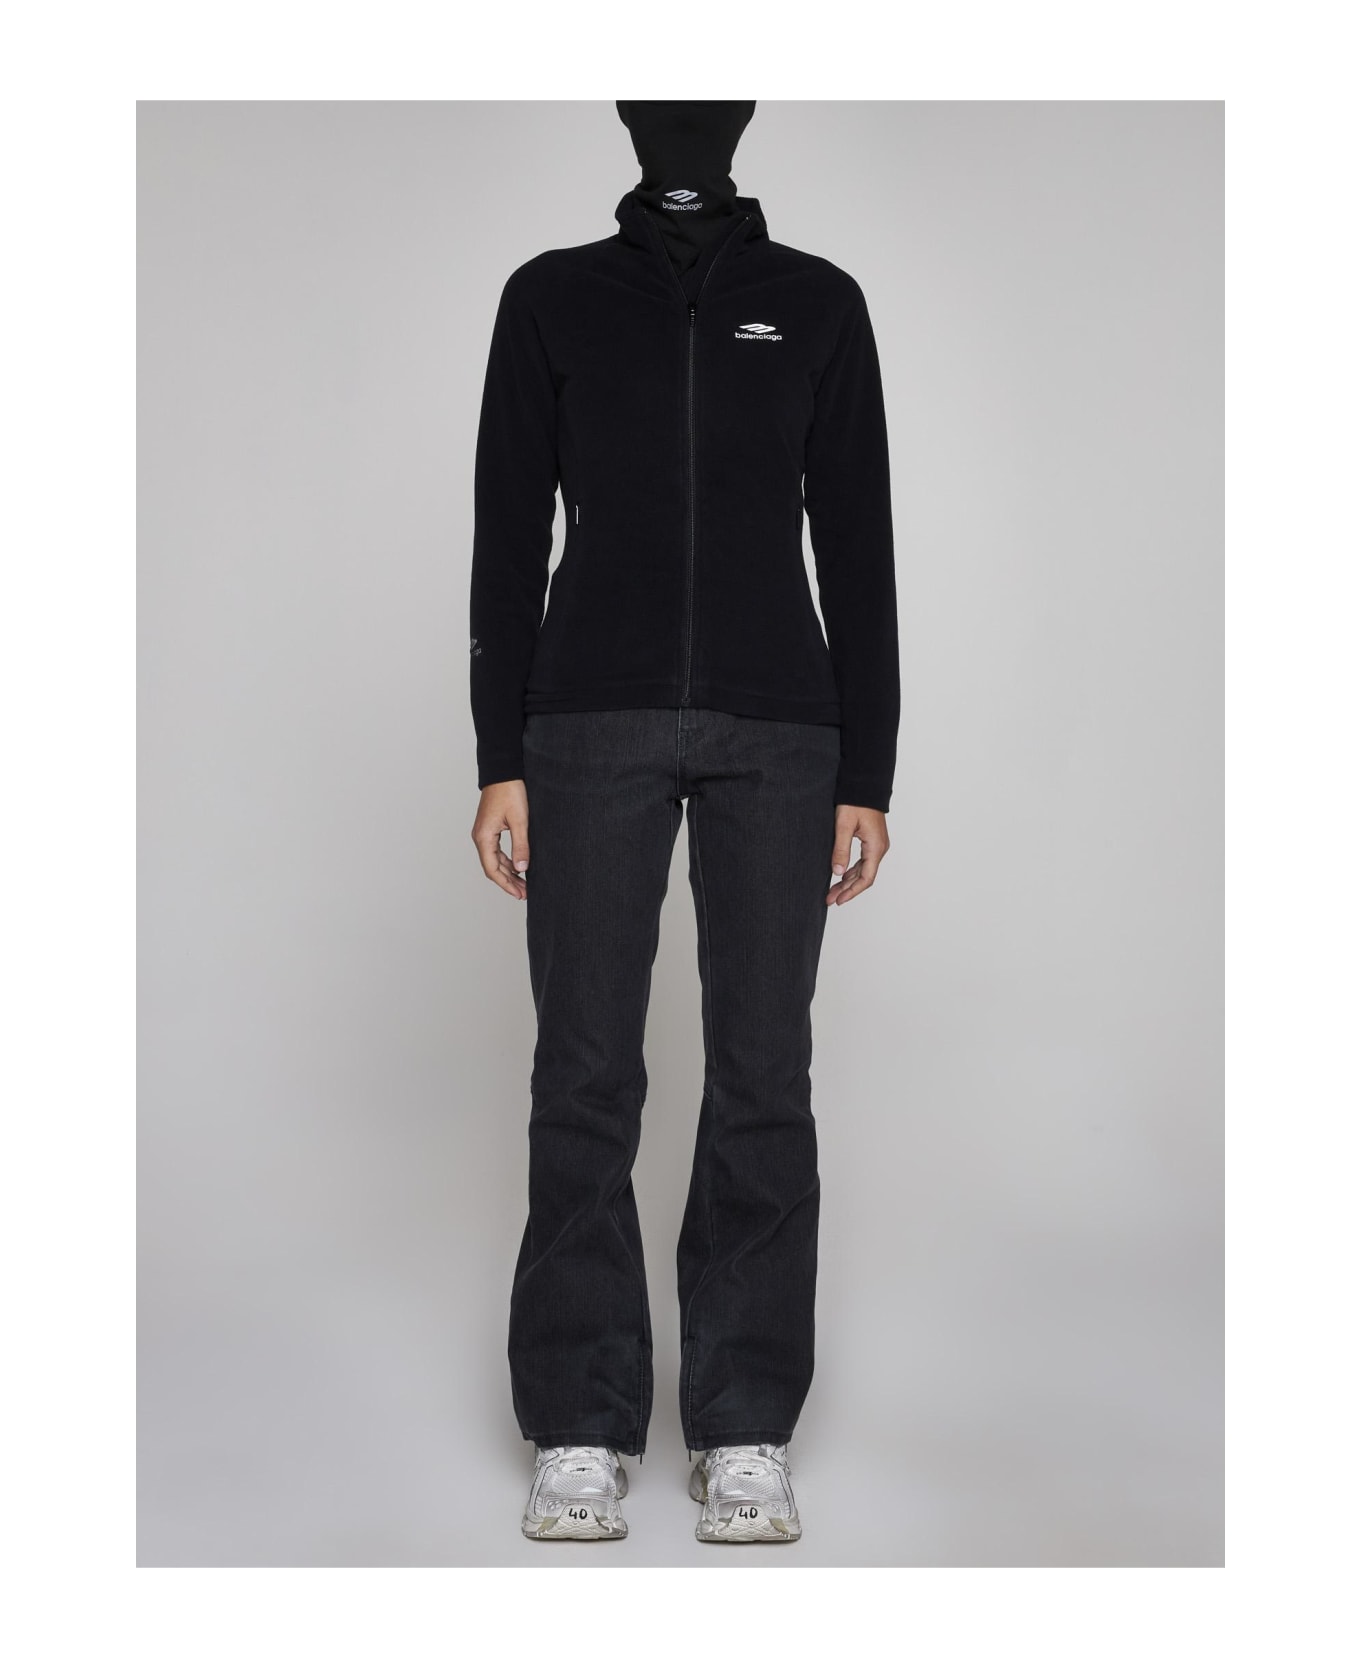 Balenciaga Polar Fleece Zip-up Track Jacket - Black ジャケット